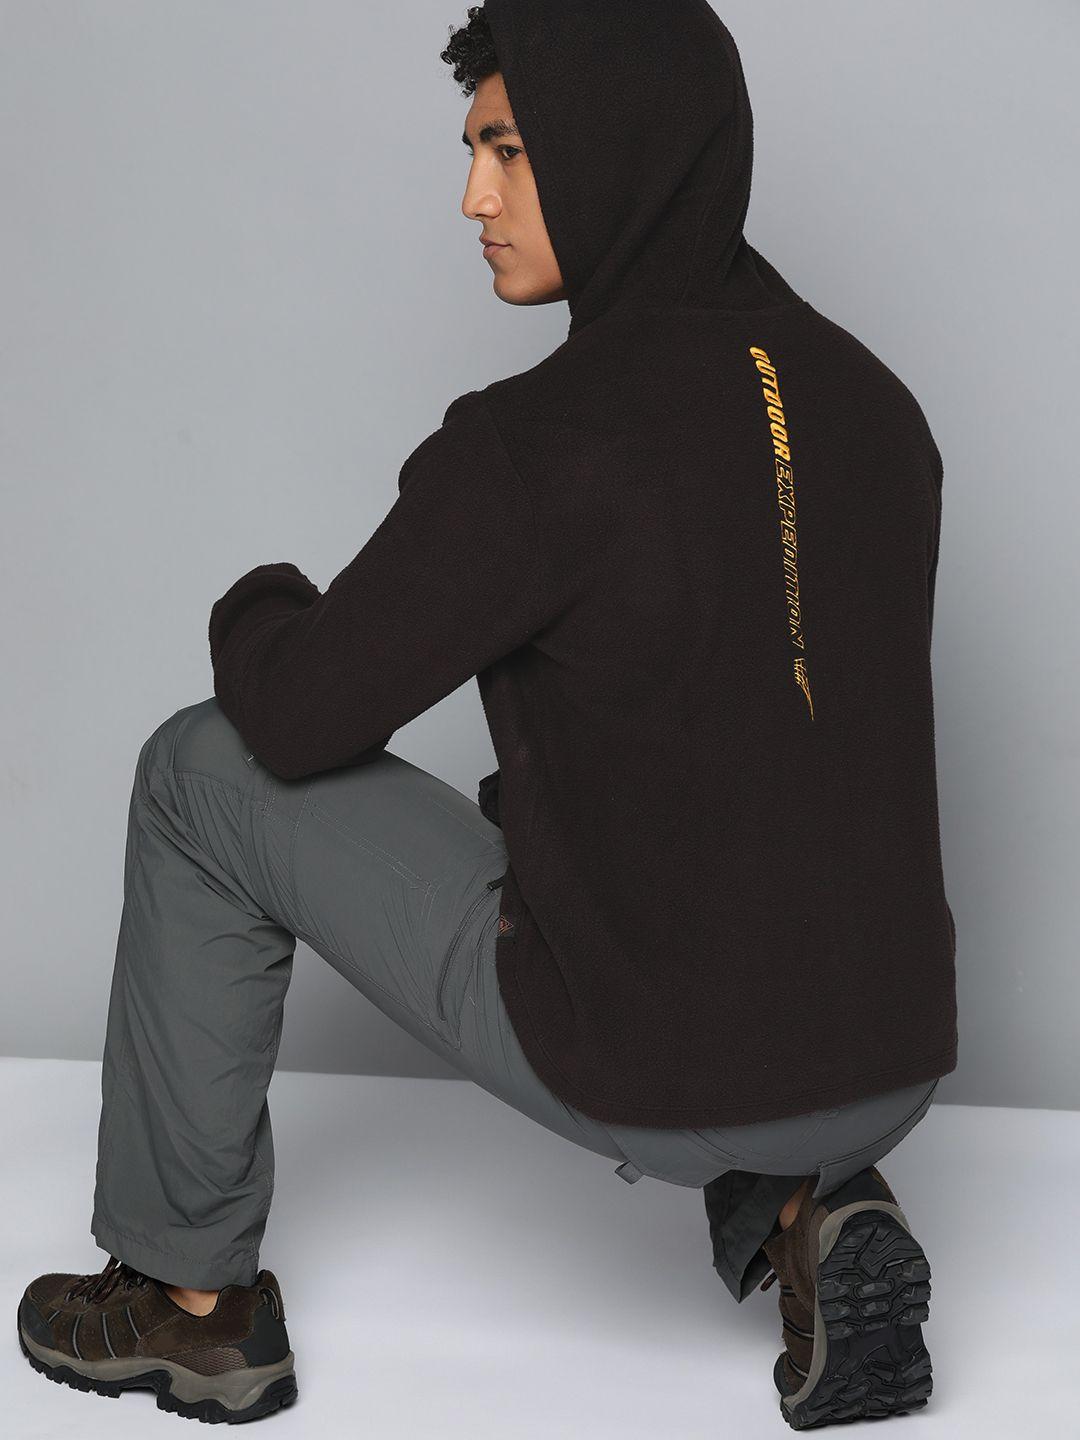 hrx by hrithik roshan outdoor men jet black rapid-dry typography  sweatshirts